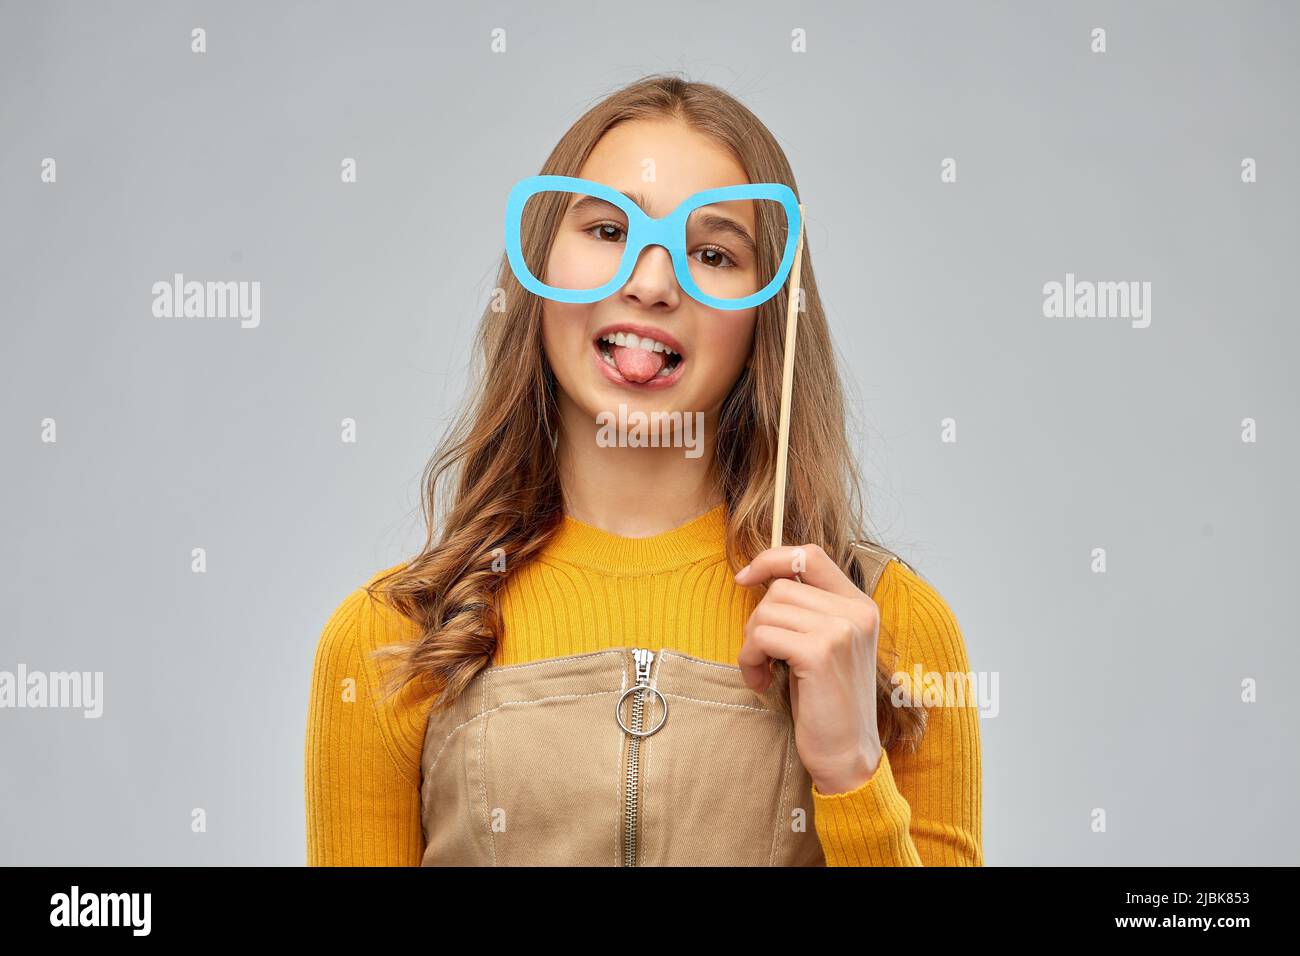 smiling teenage girl with big glasses Stock Photo